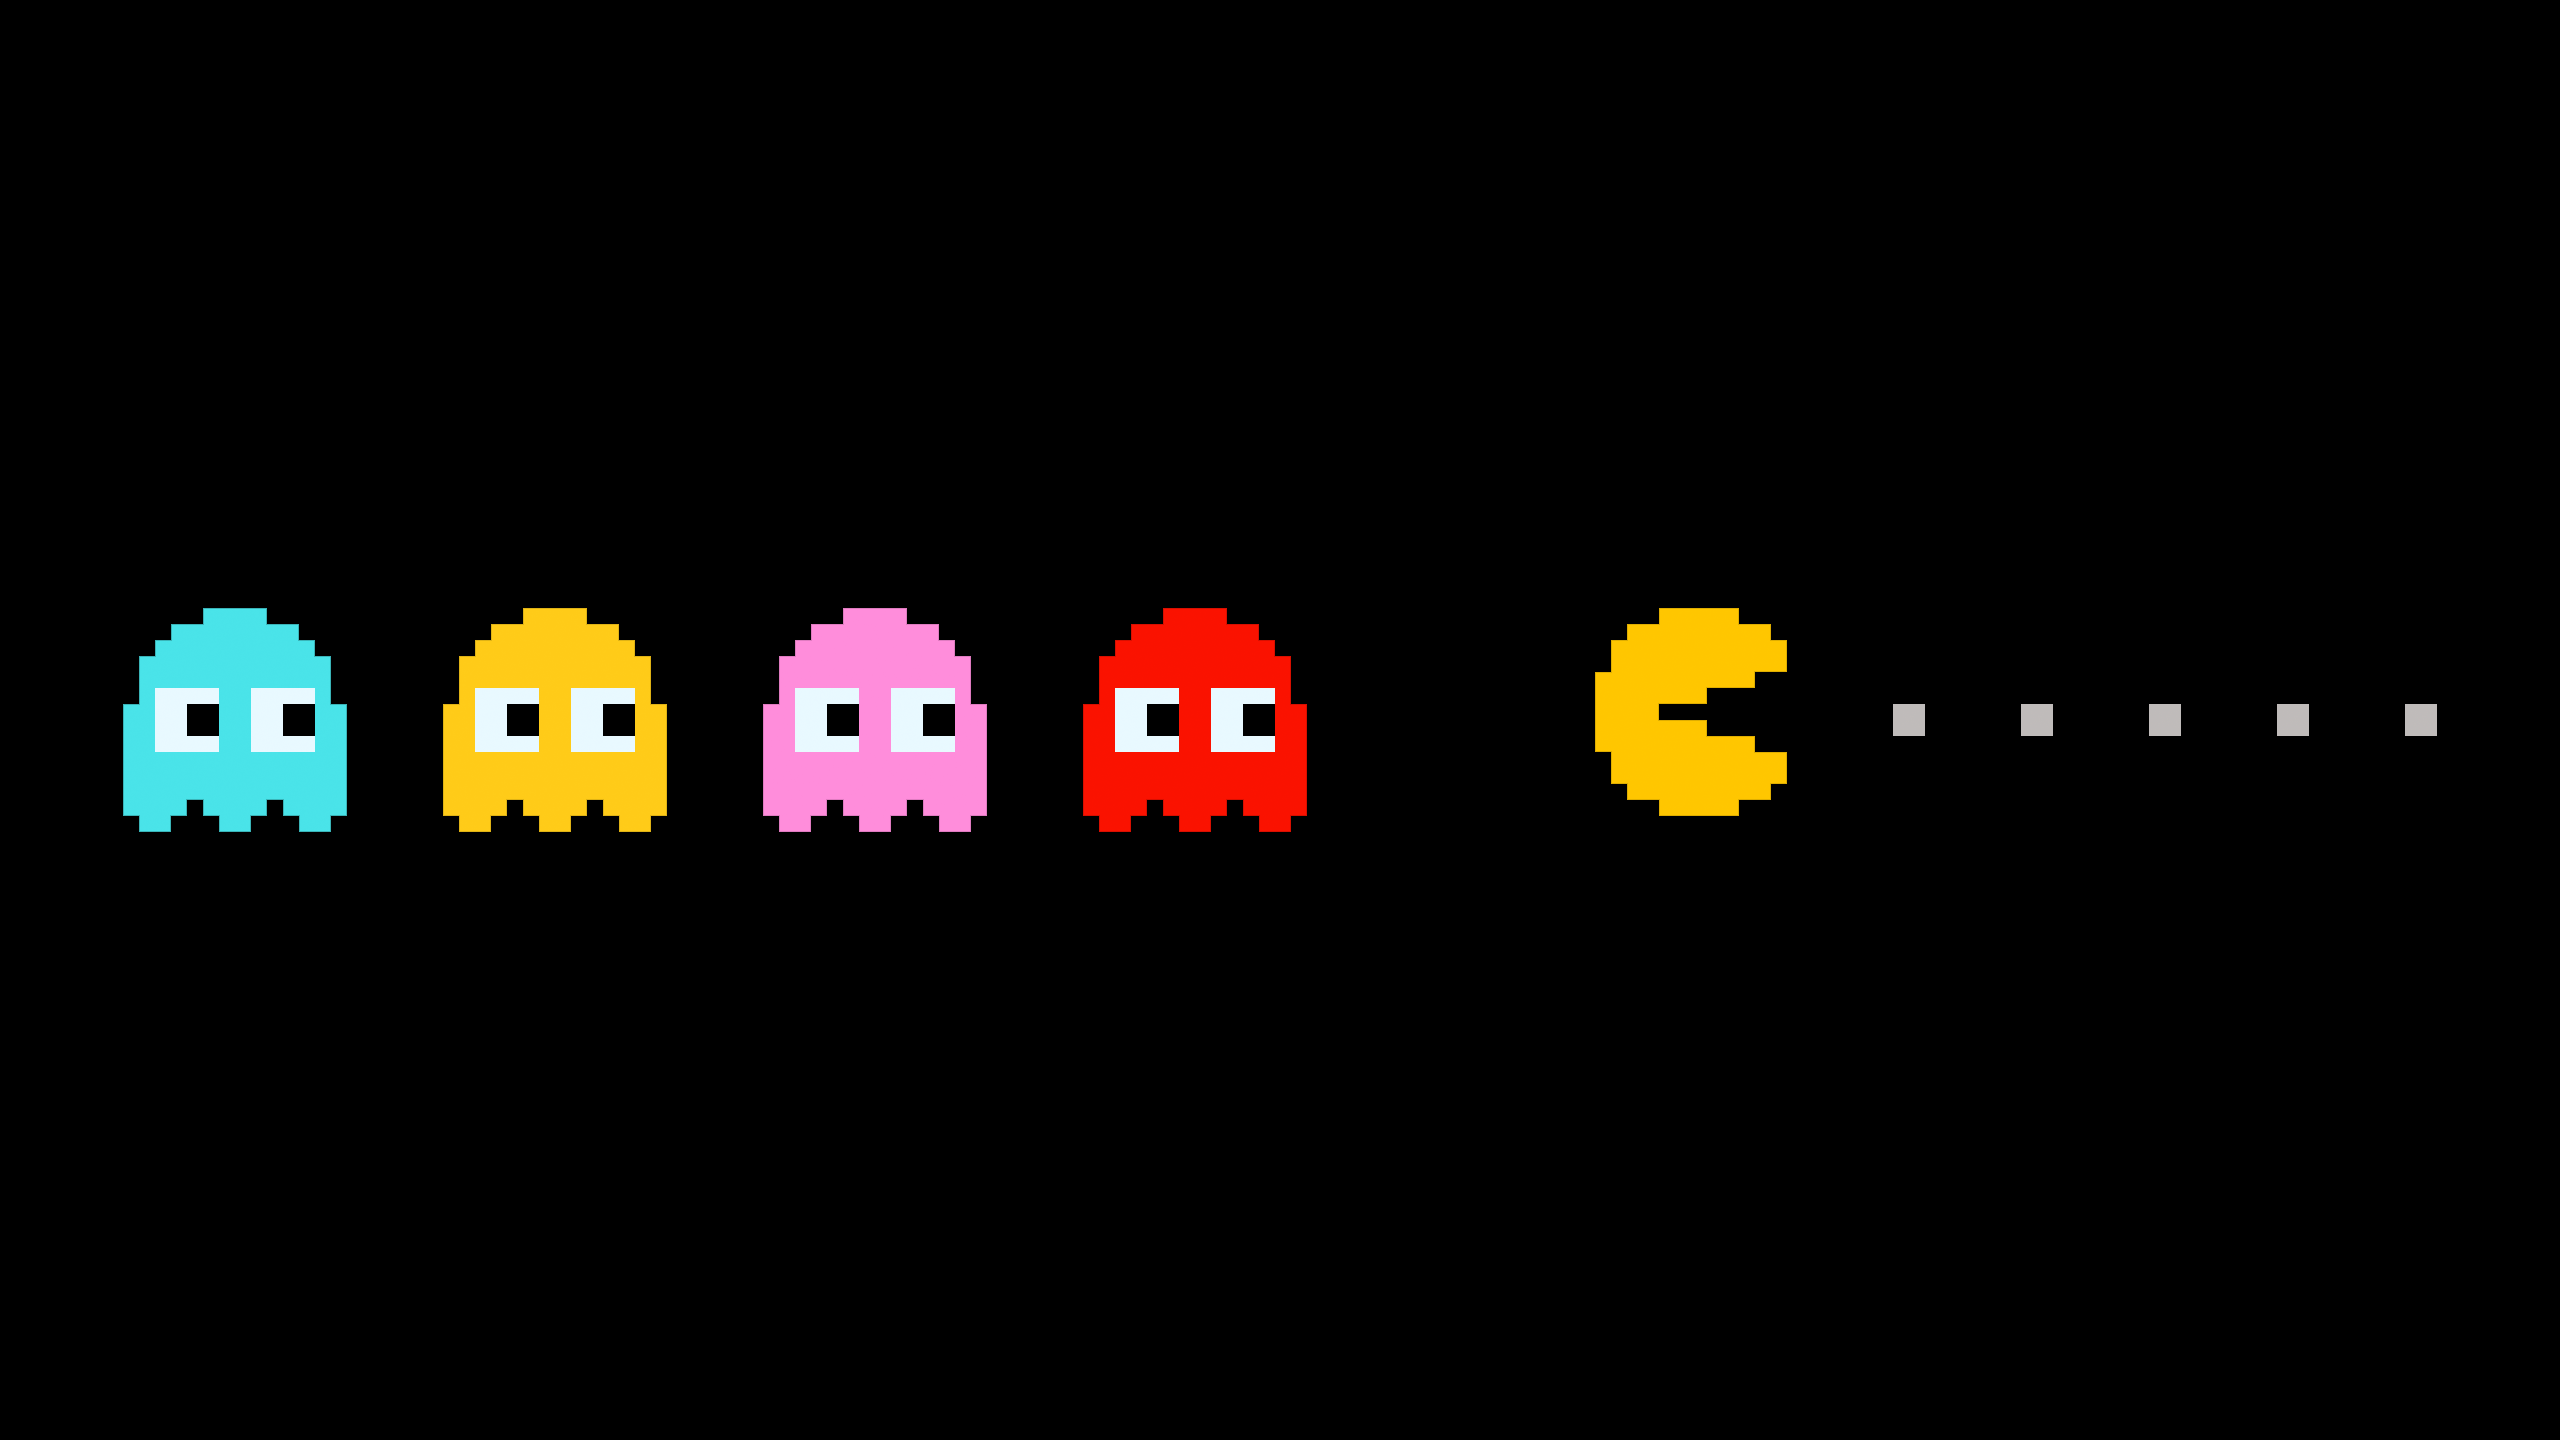 Pac Man Wallpaper